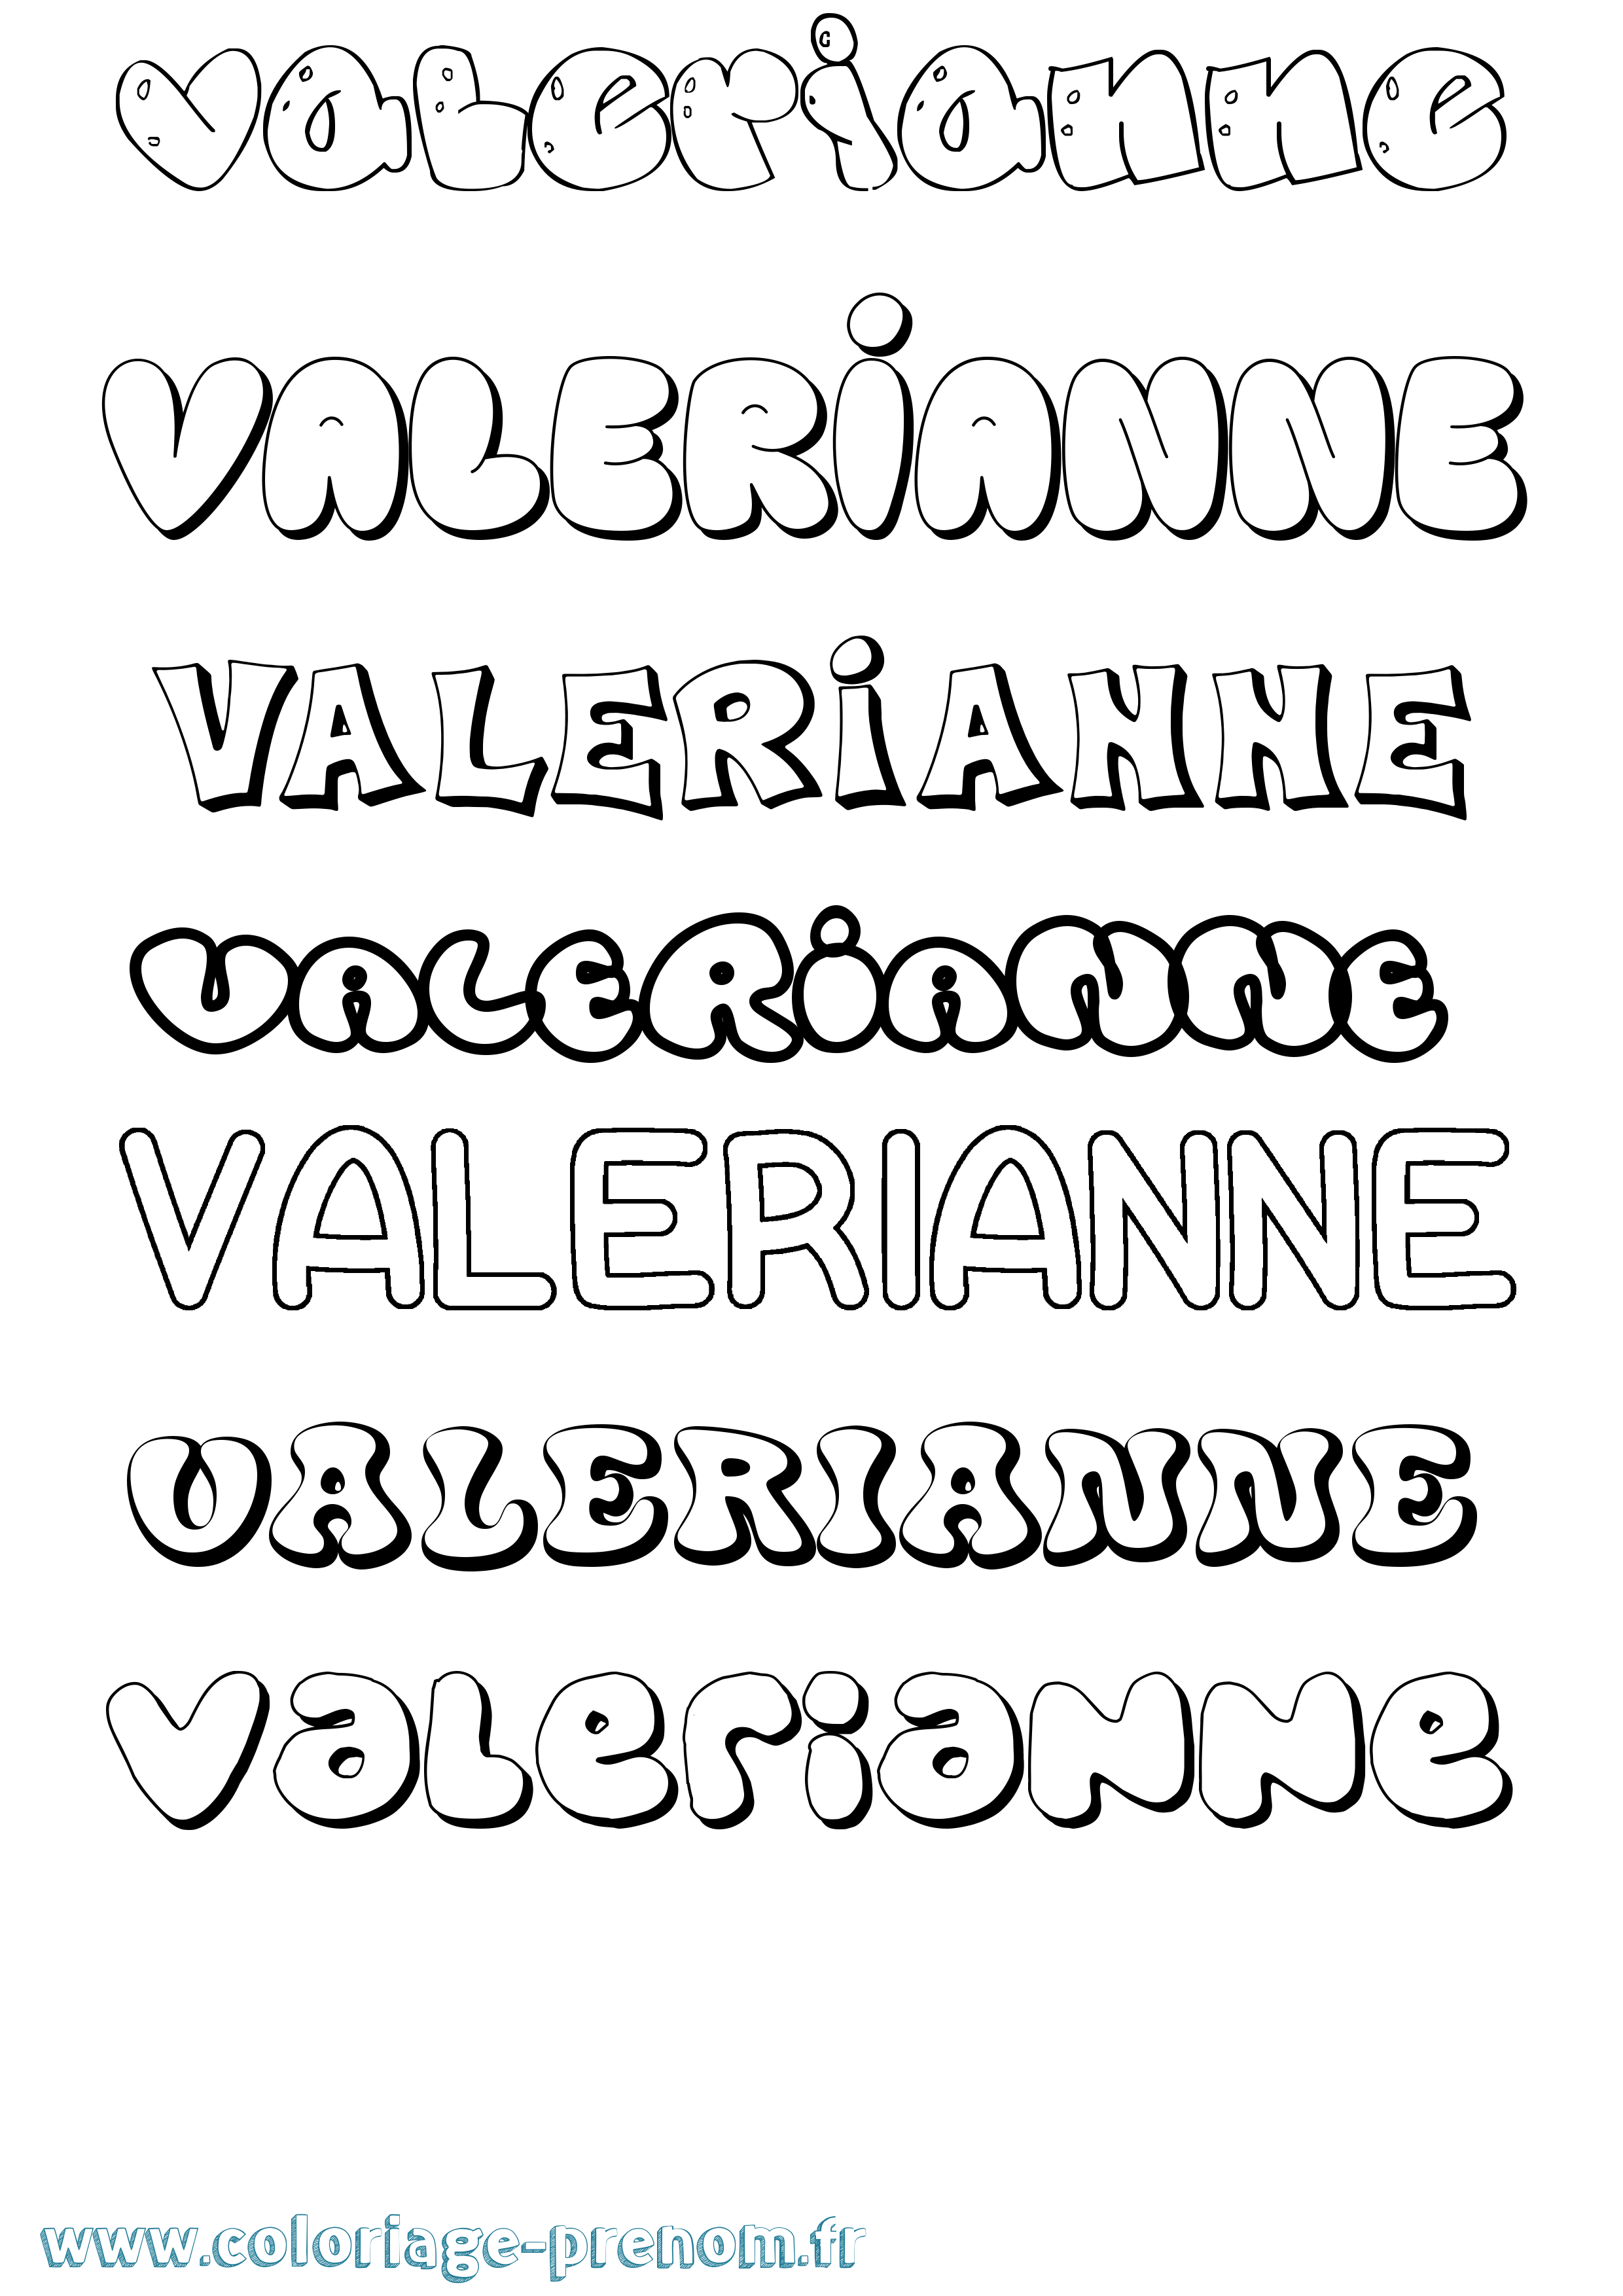 Coloriage prénom Valerianne Bubble